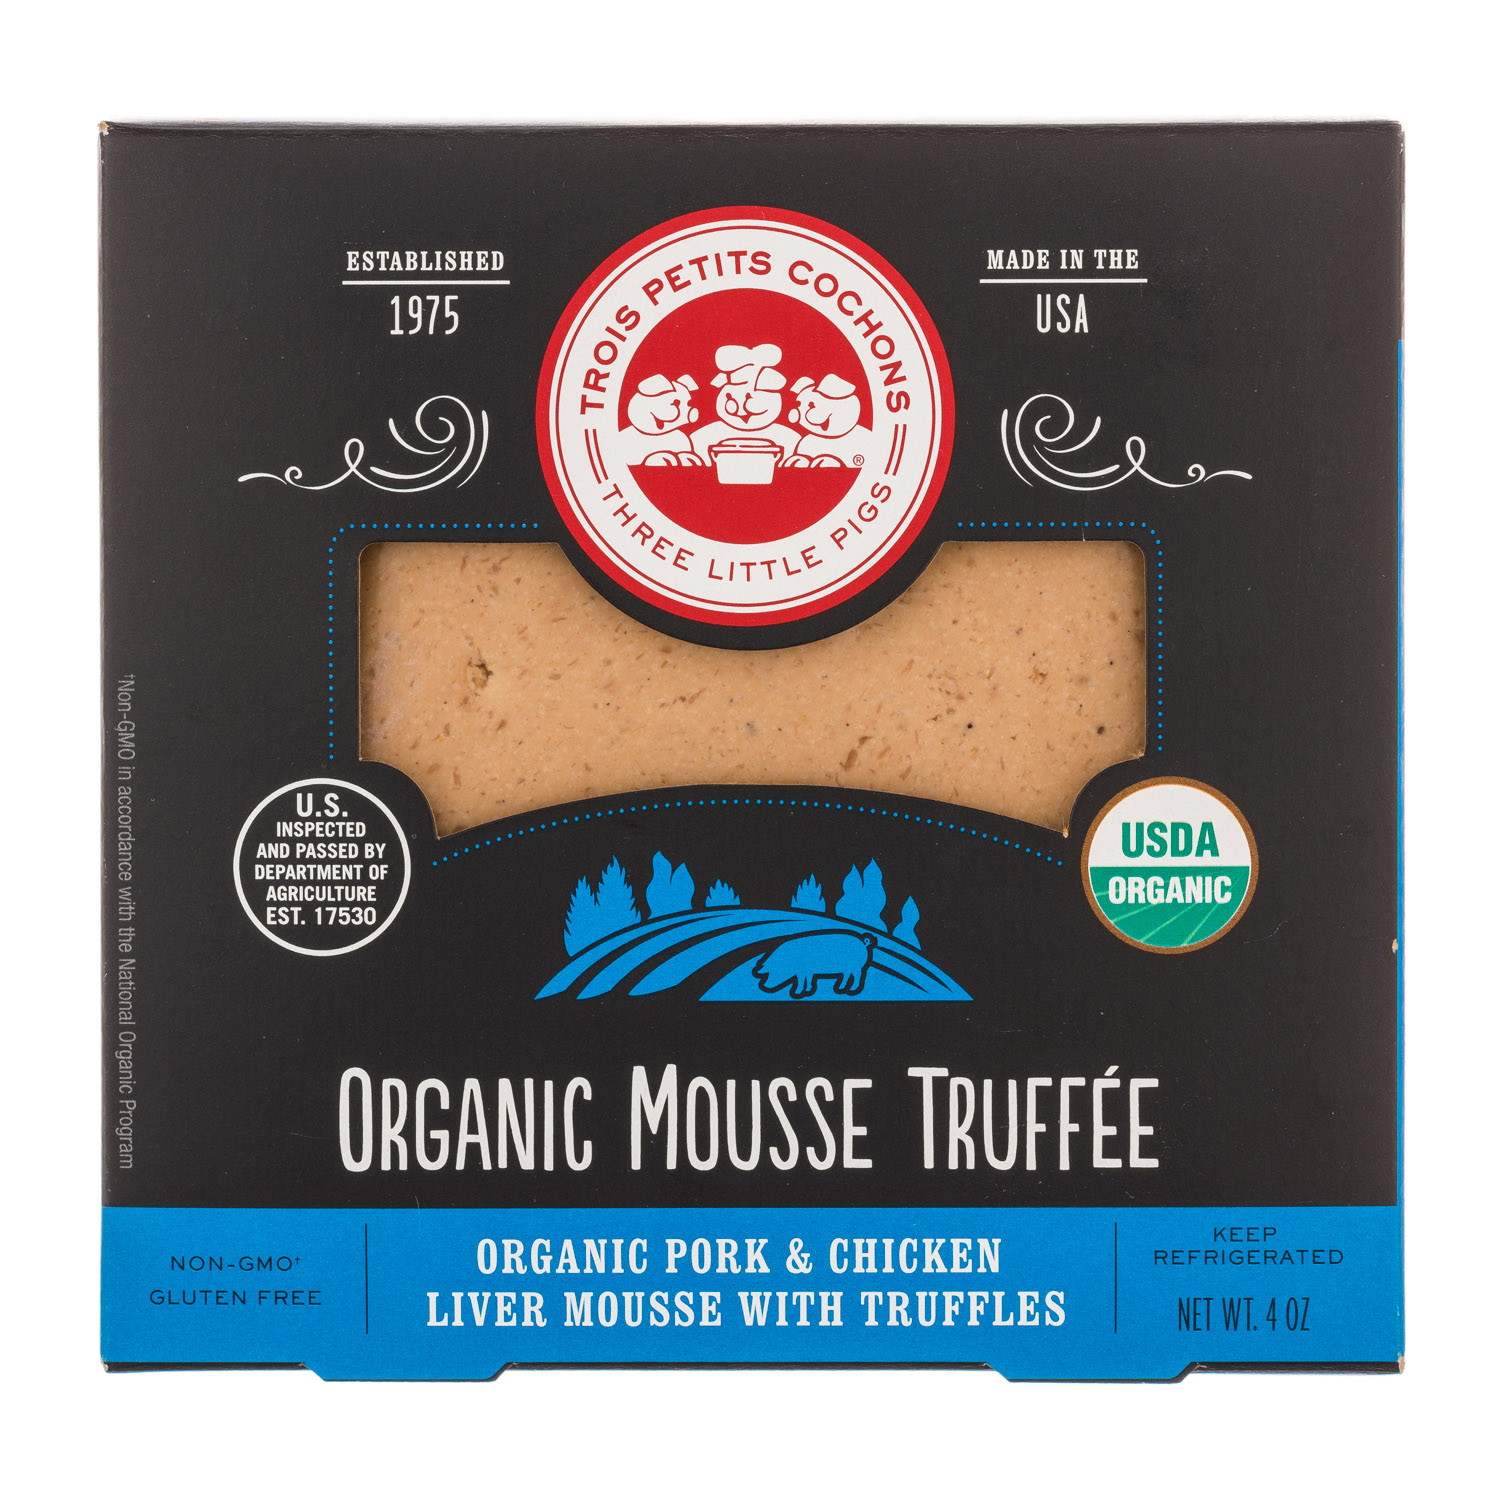 Organic Mousse Truffee